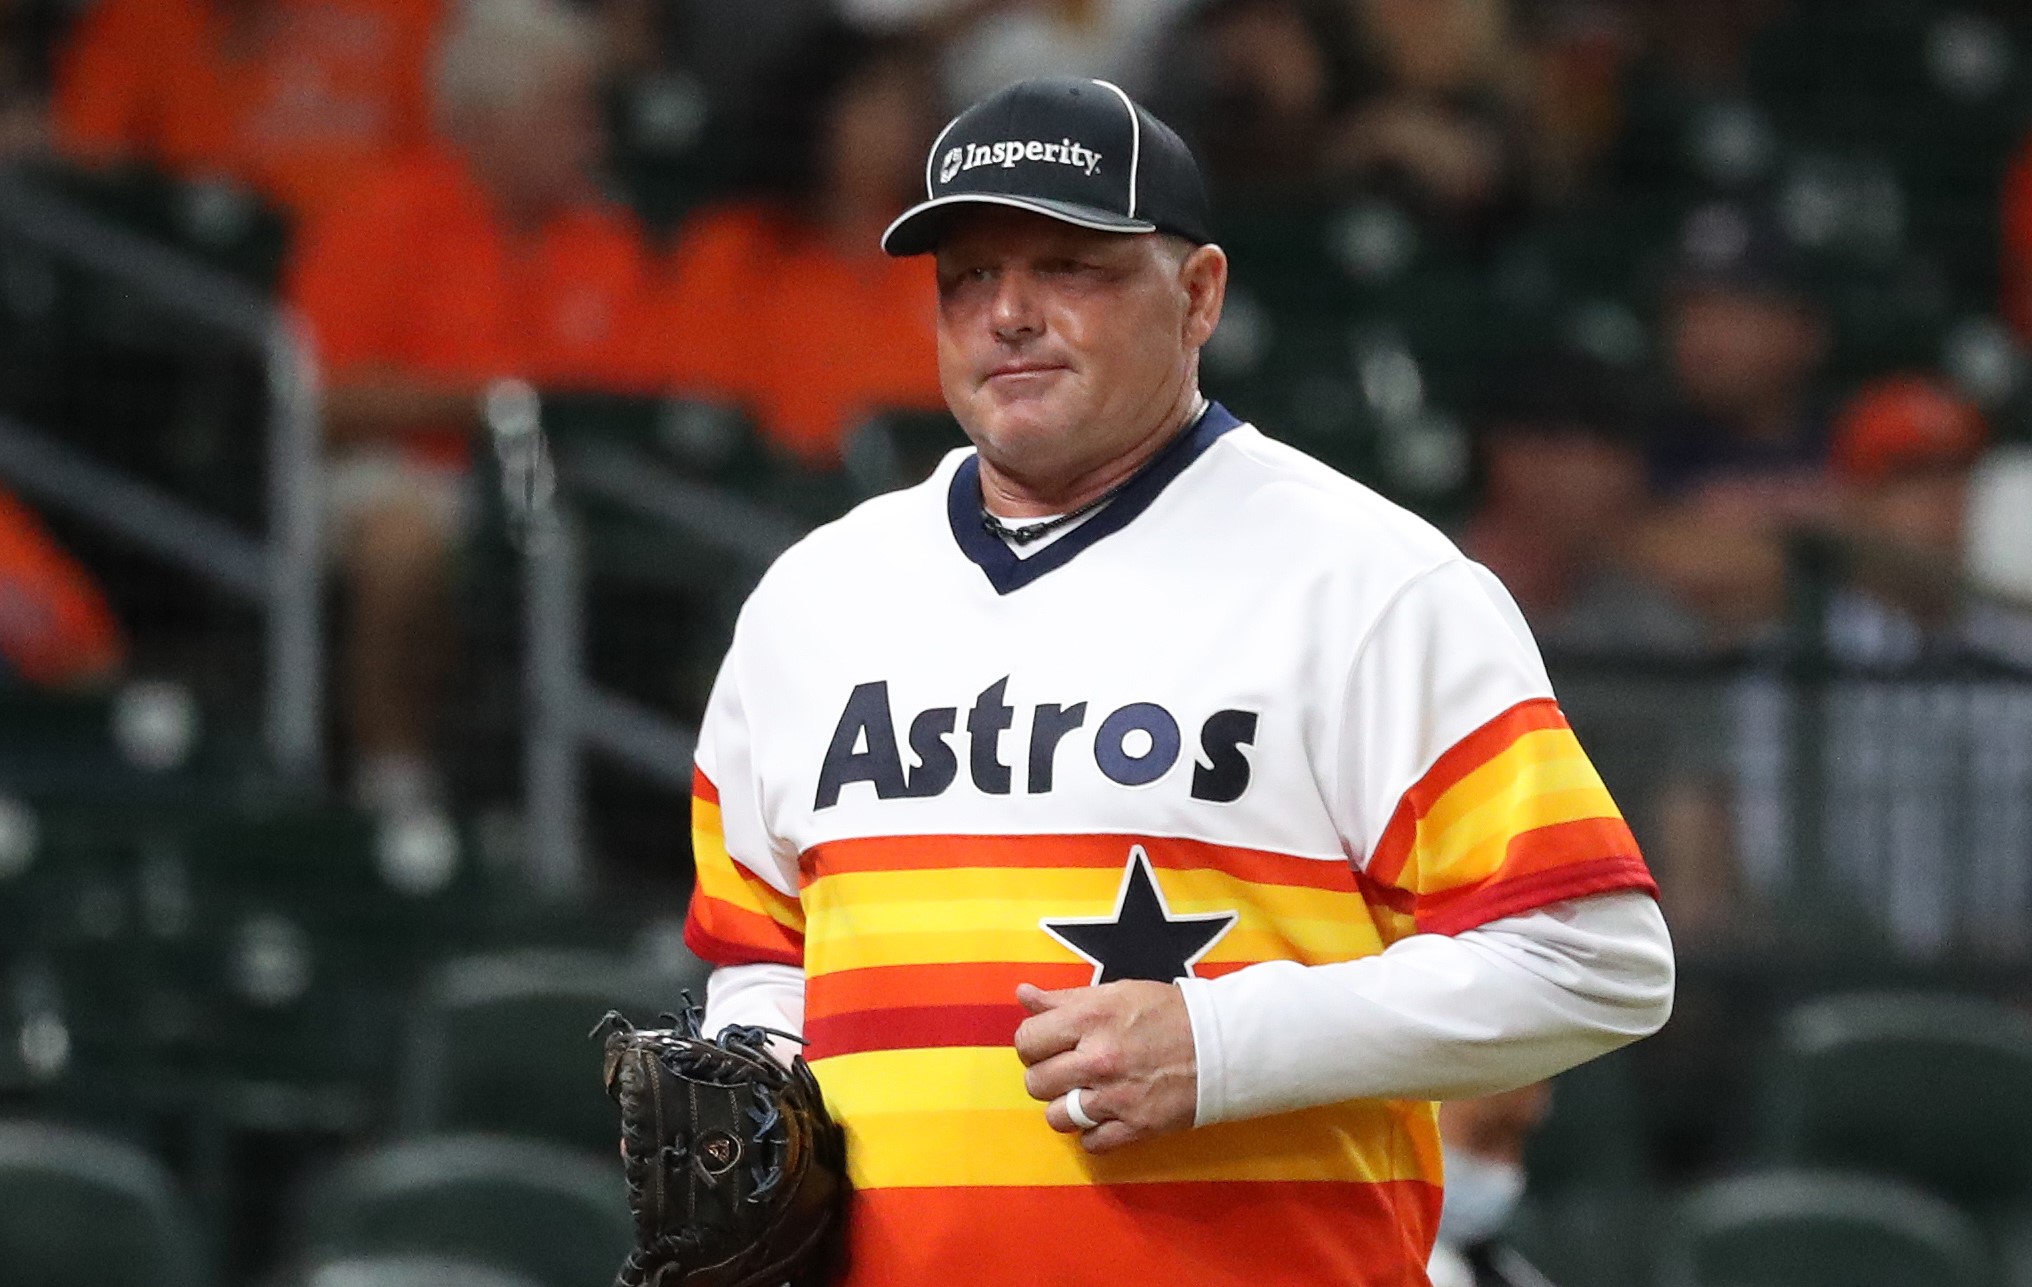 Roy Oswalt Houston Astros Game Used Baseball Cap